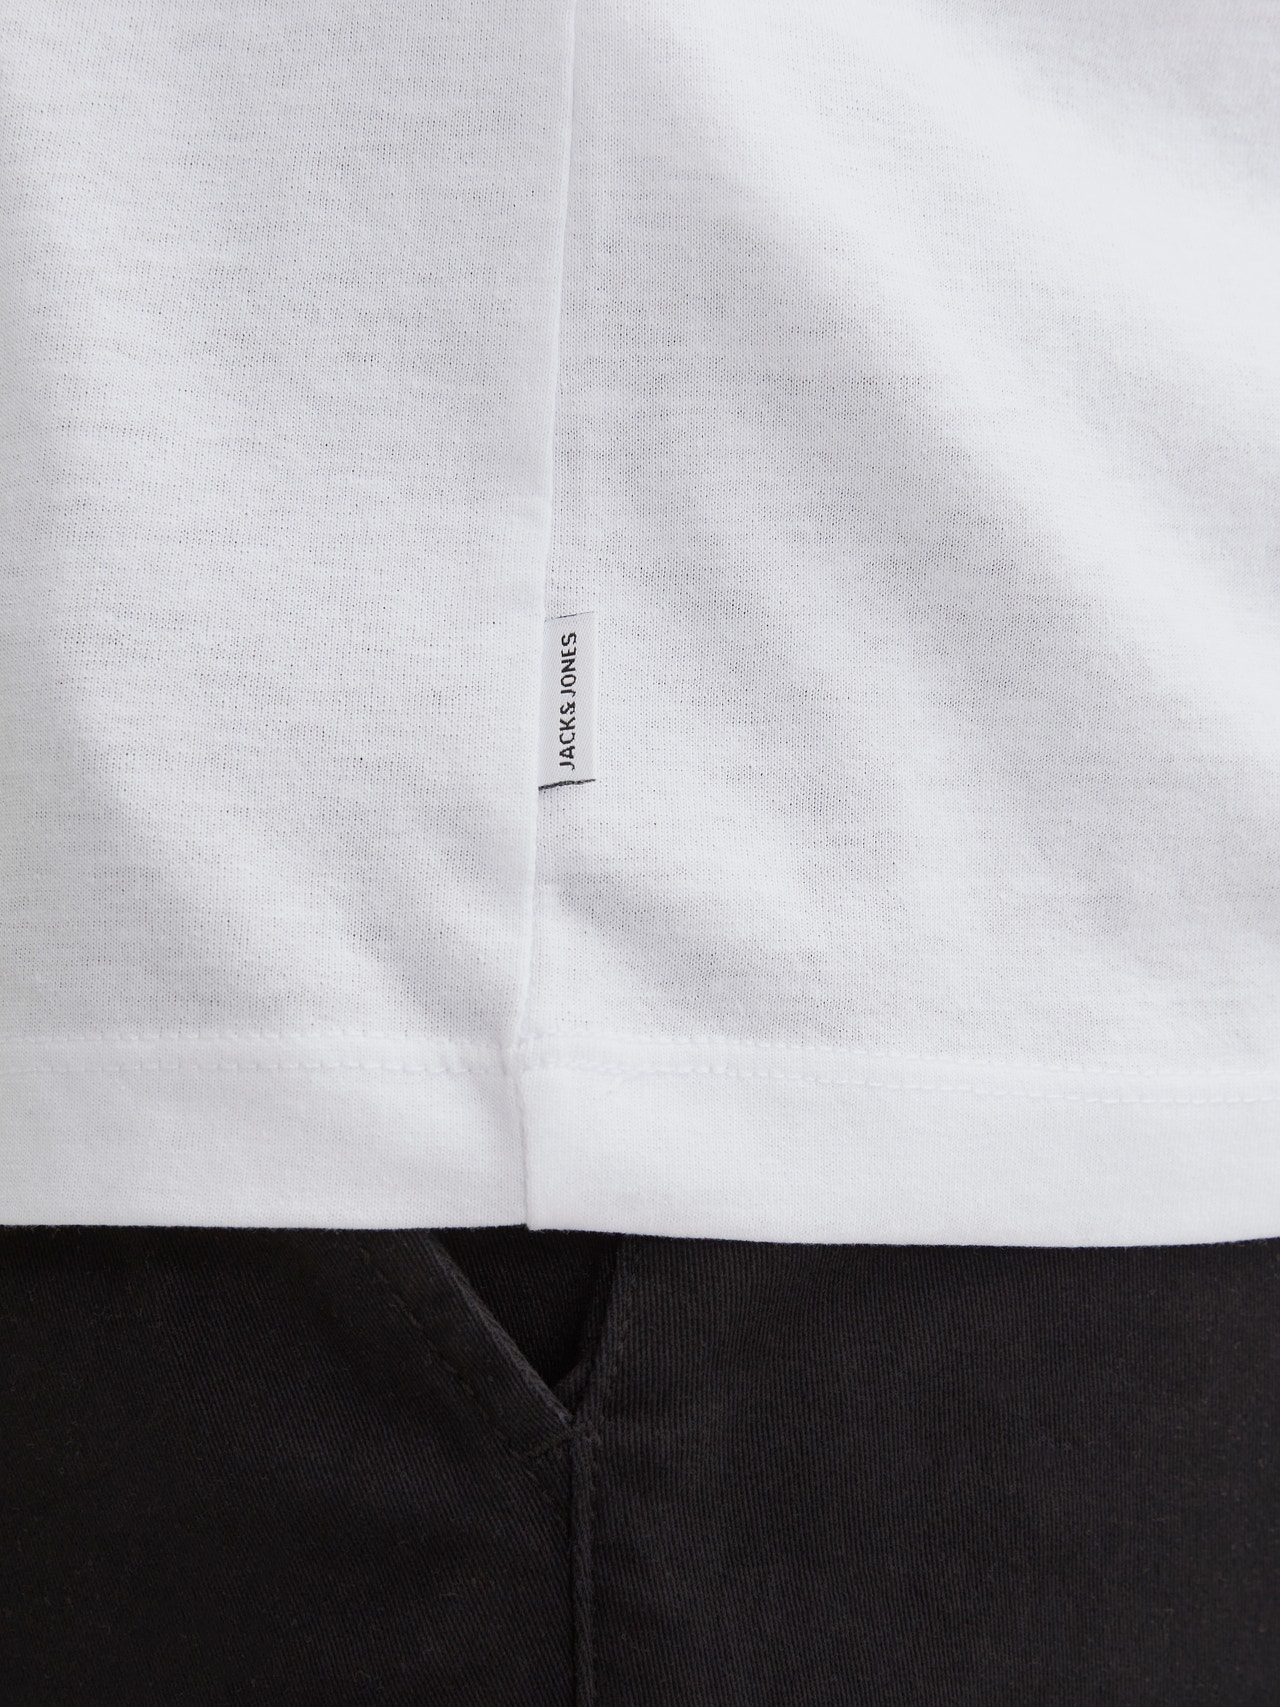 Jack & Jones Plus Size Trykk T-skjorte -White - 12254902